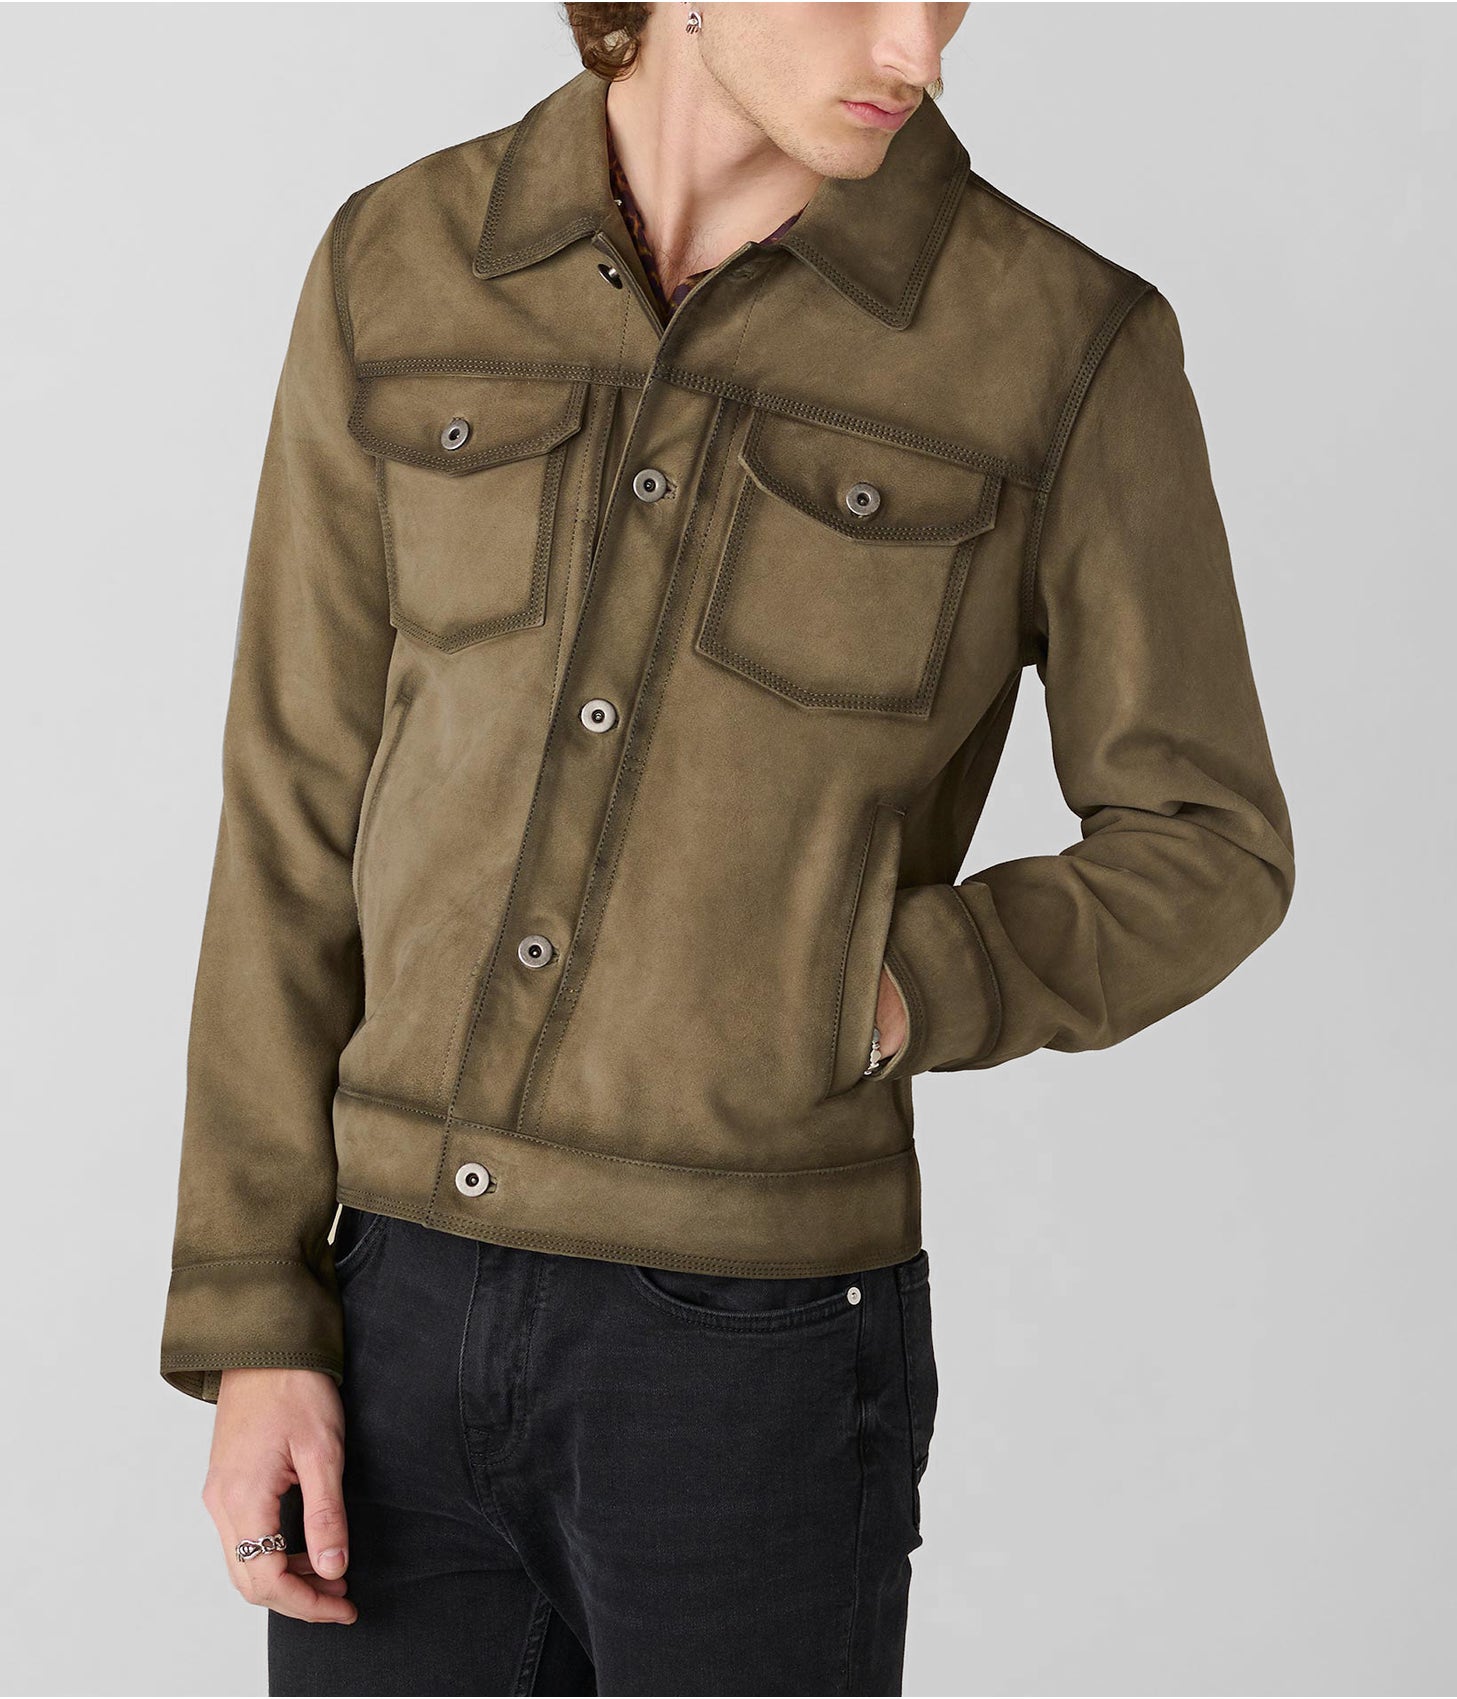 Robinson denim jacket (EMBF219-201) – Today's Man Shop